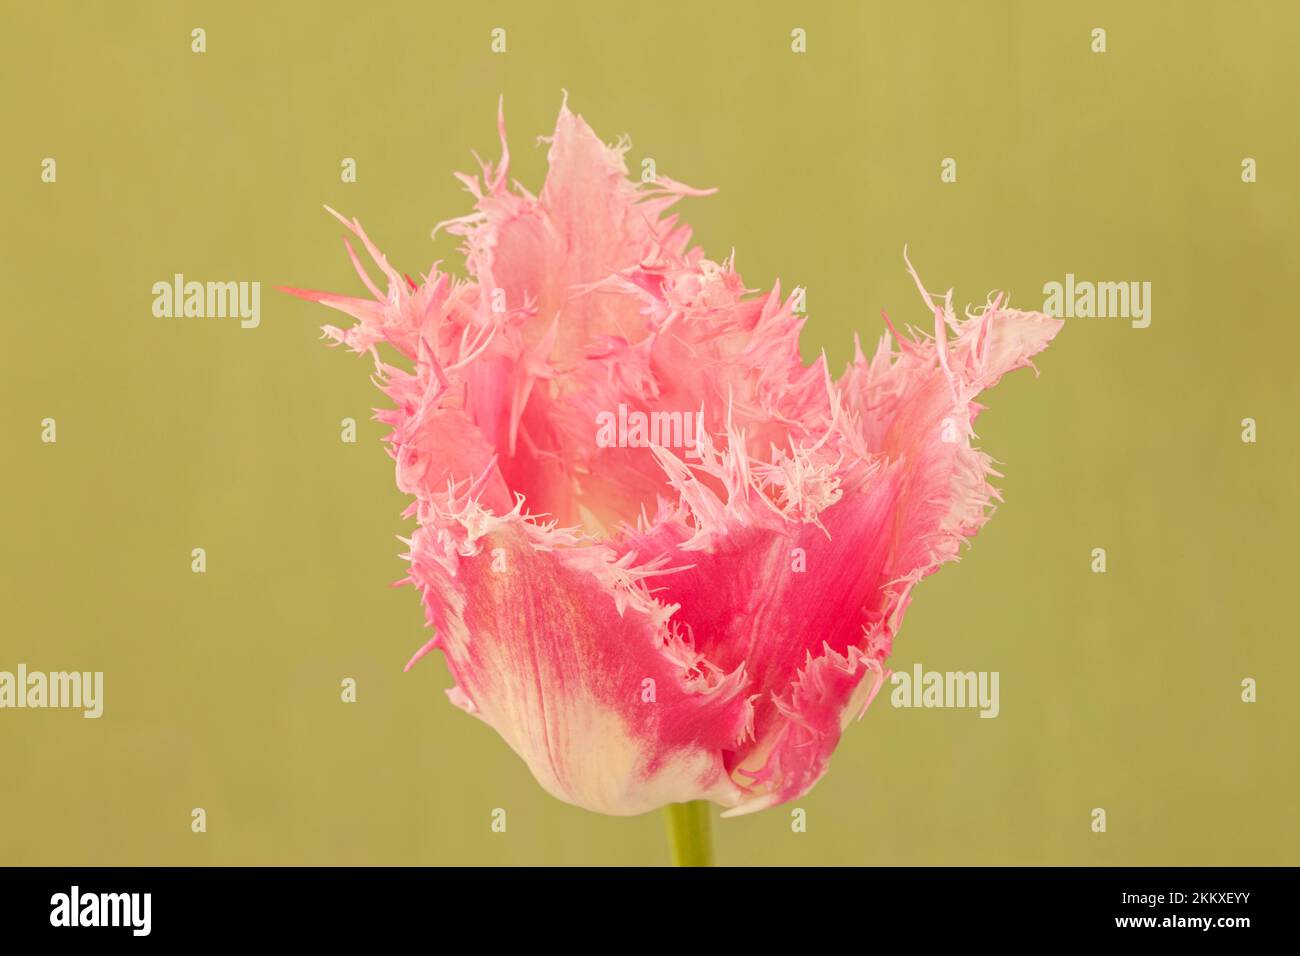 Tulipa 'Huis ten Bosch', Pink Fringed Tulip Stock Photo